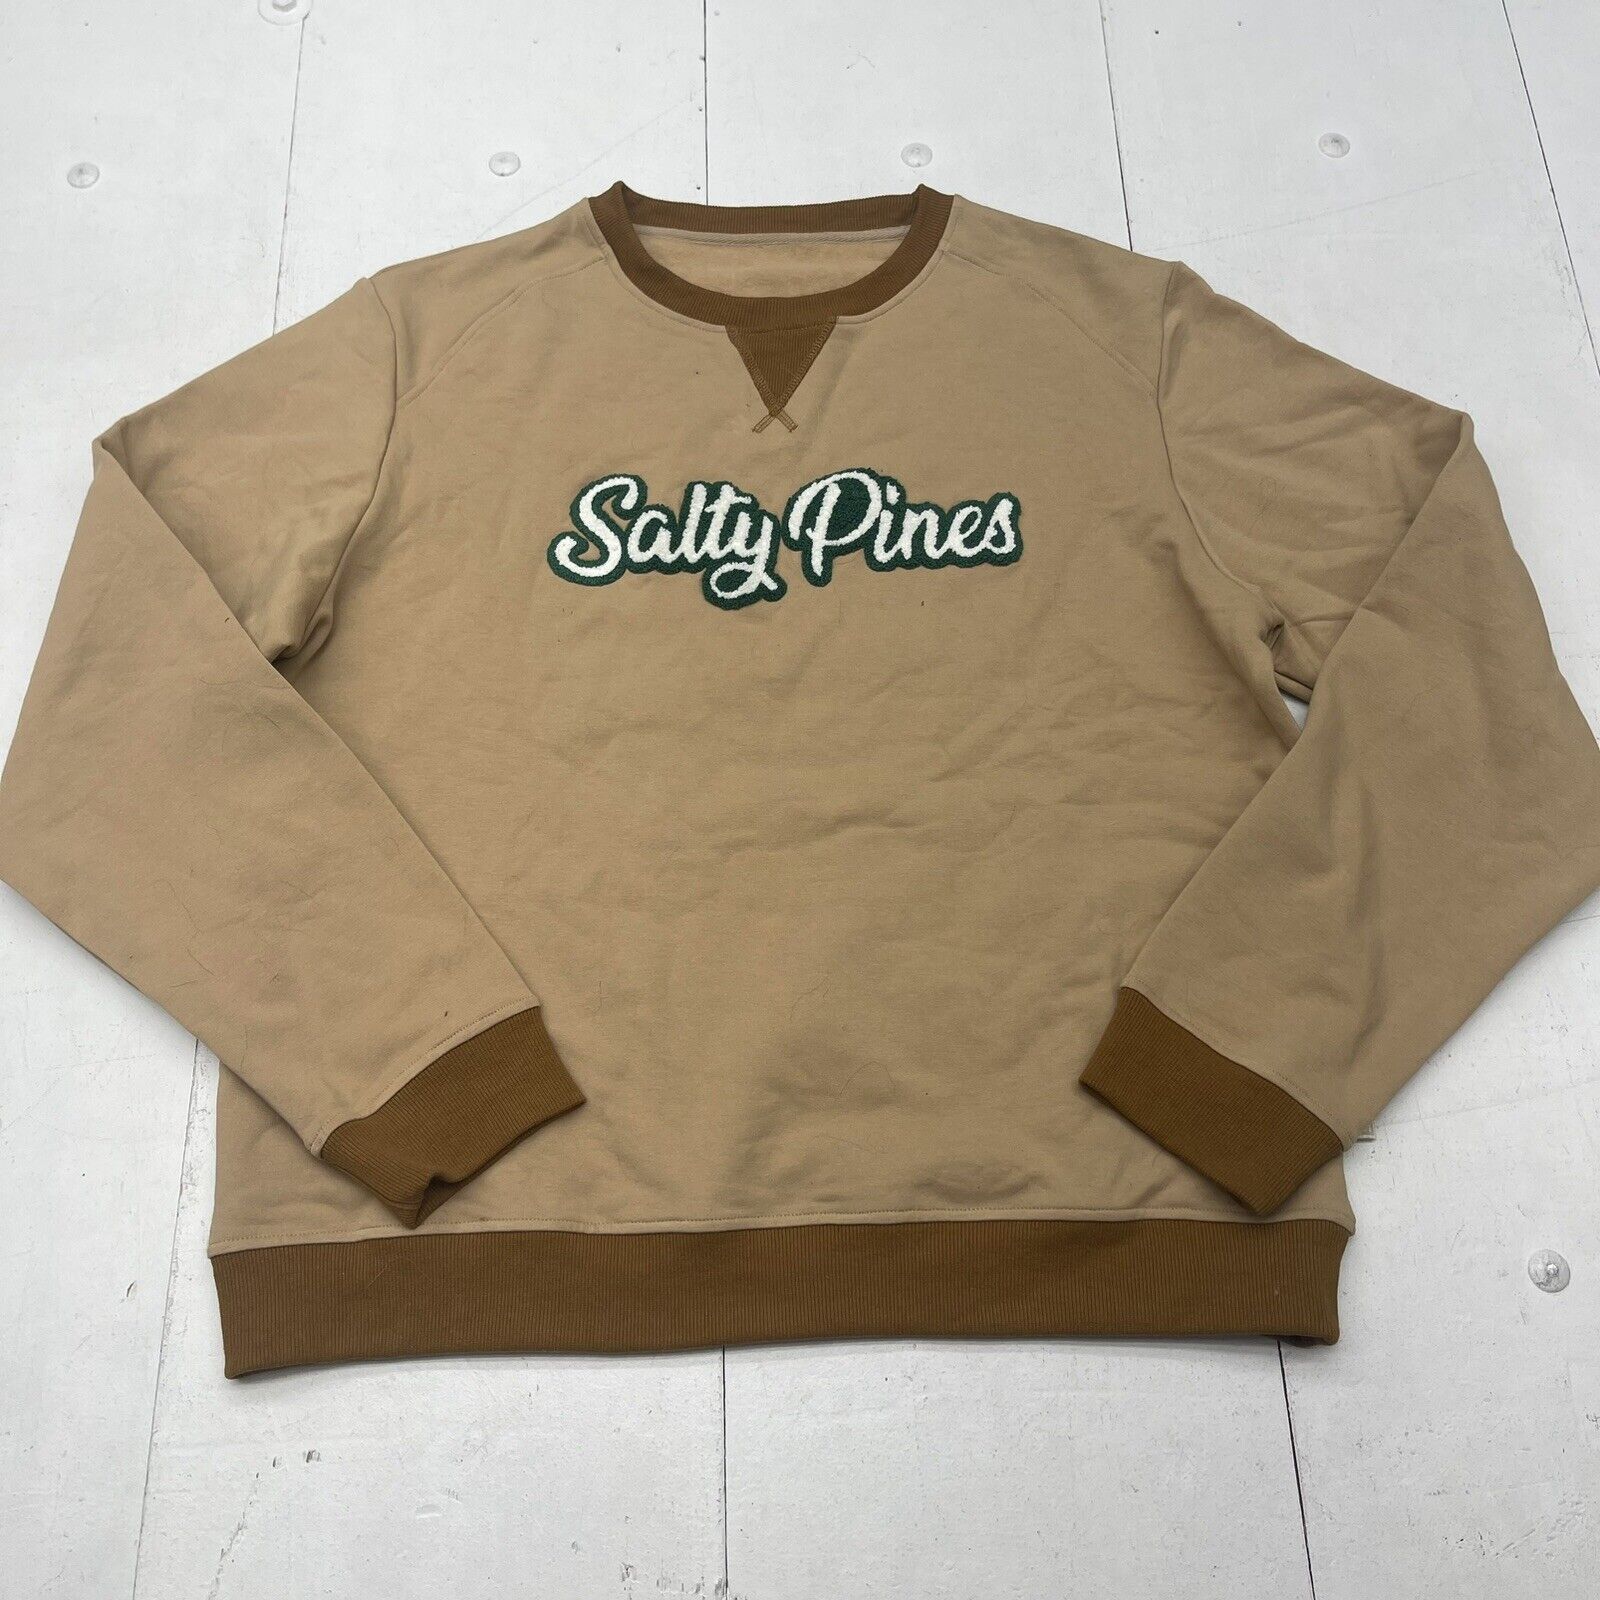 Salt & Pine Brown Salty Pines Embroidered Crewneck Sweatshirt Women’s XXL